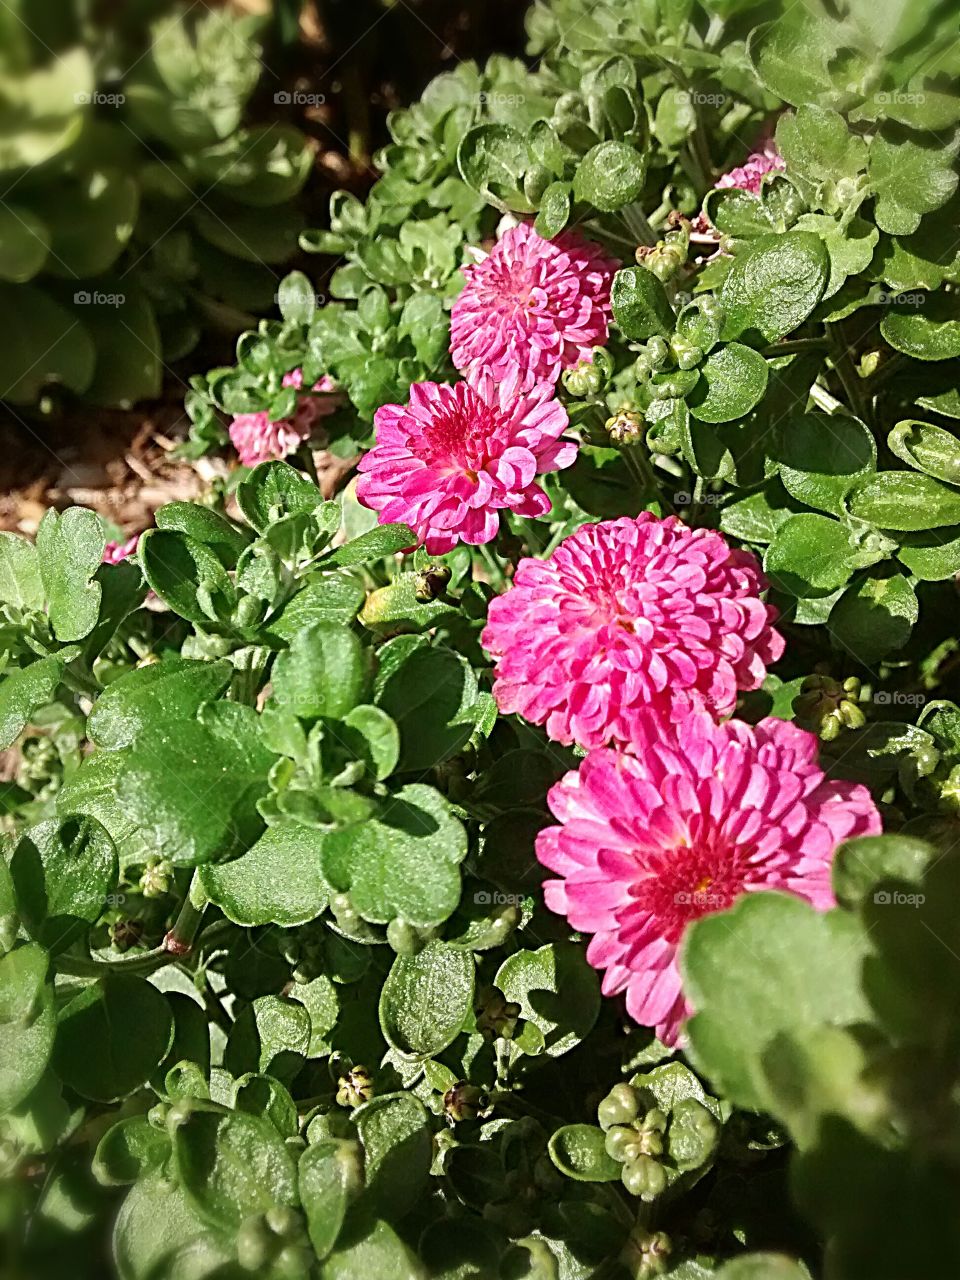 Chrysanthemums in the sun